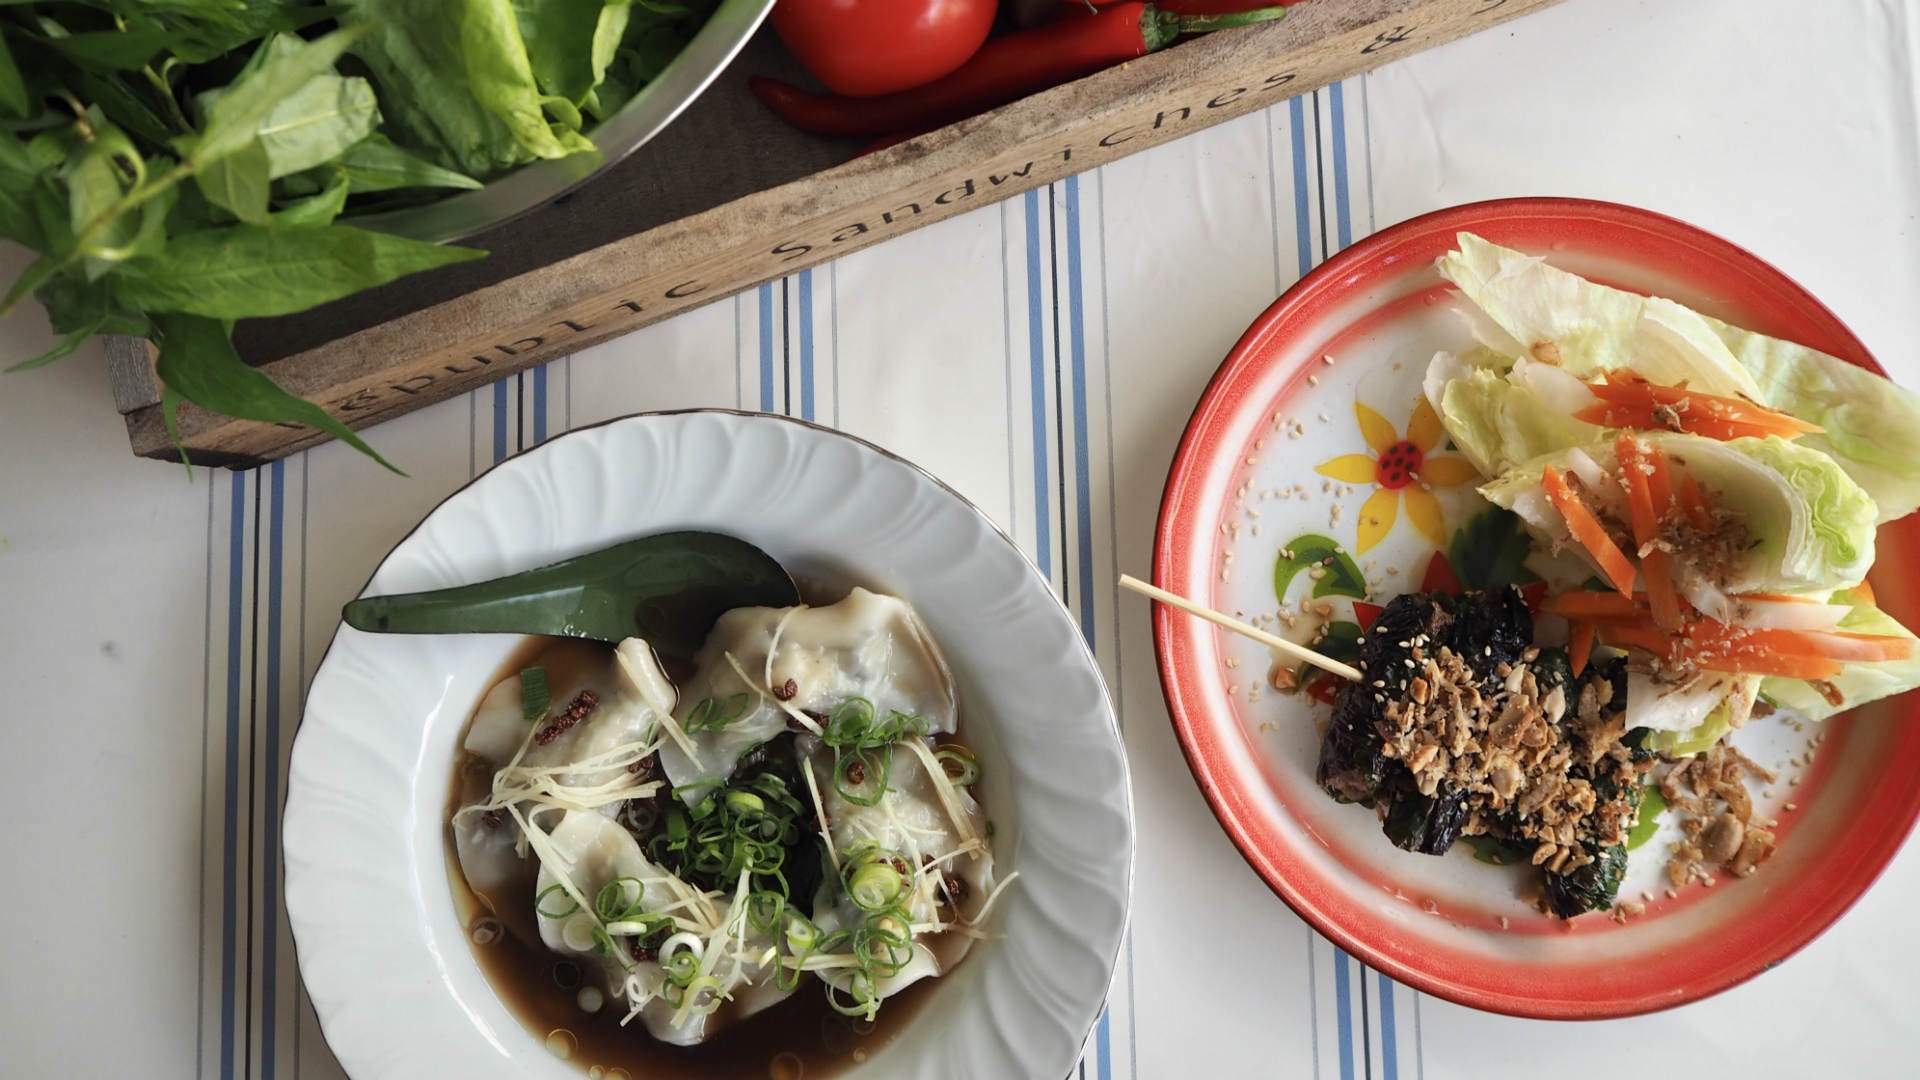 Meet Darlinghurst's Newest South East Asian Eatery, Joe's Table